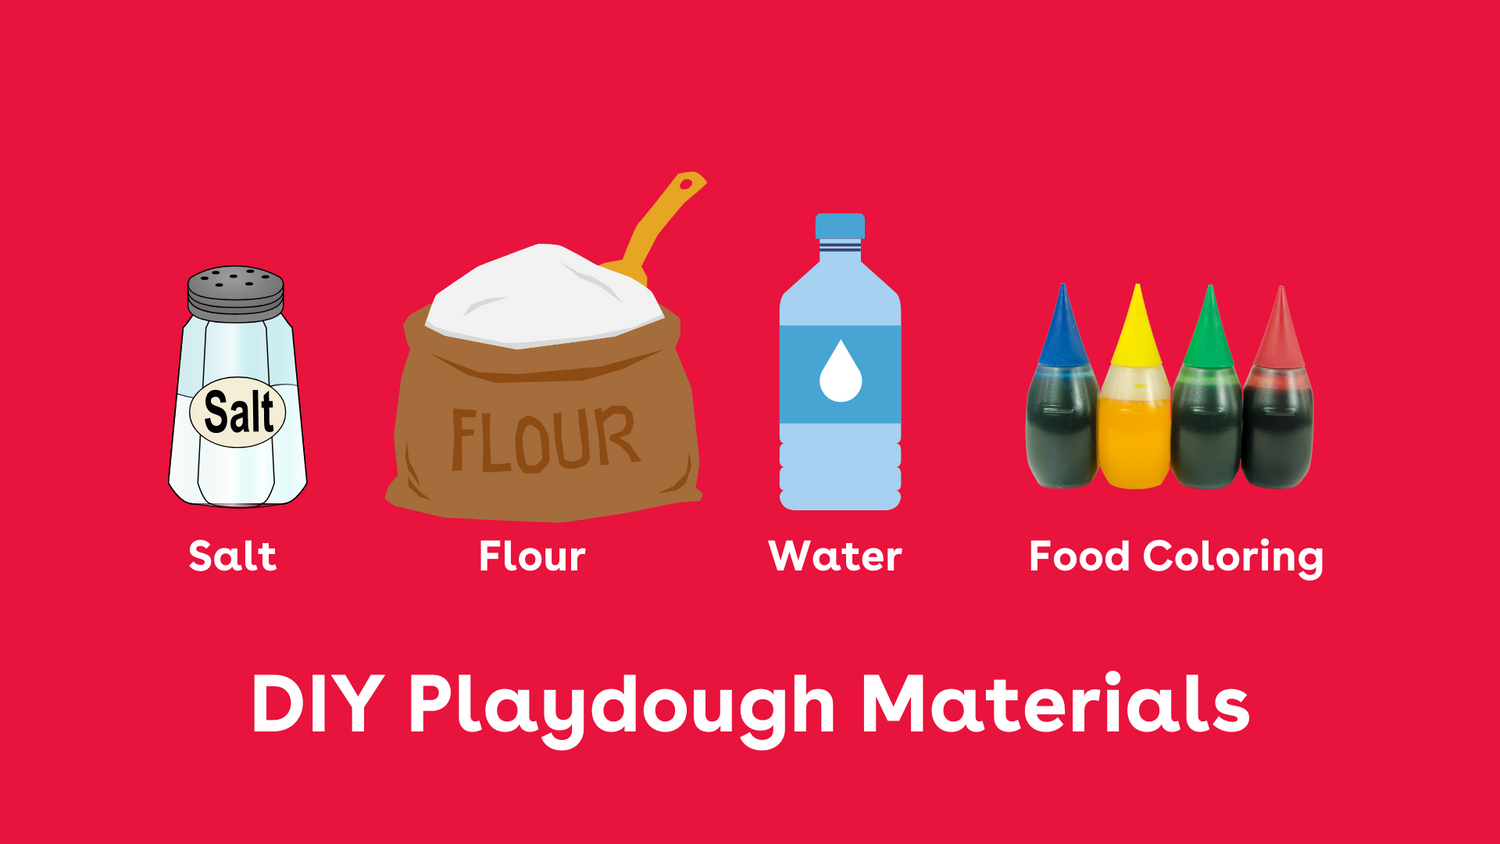 Materials: salt, flour, water, food coloring